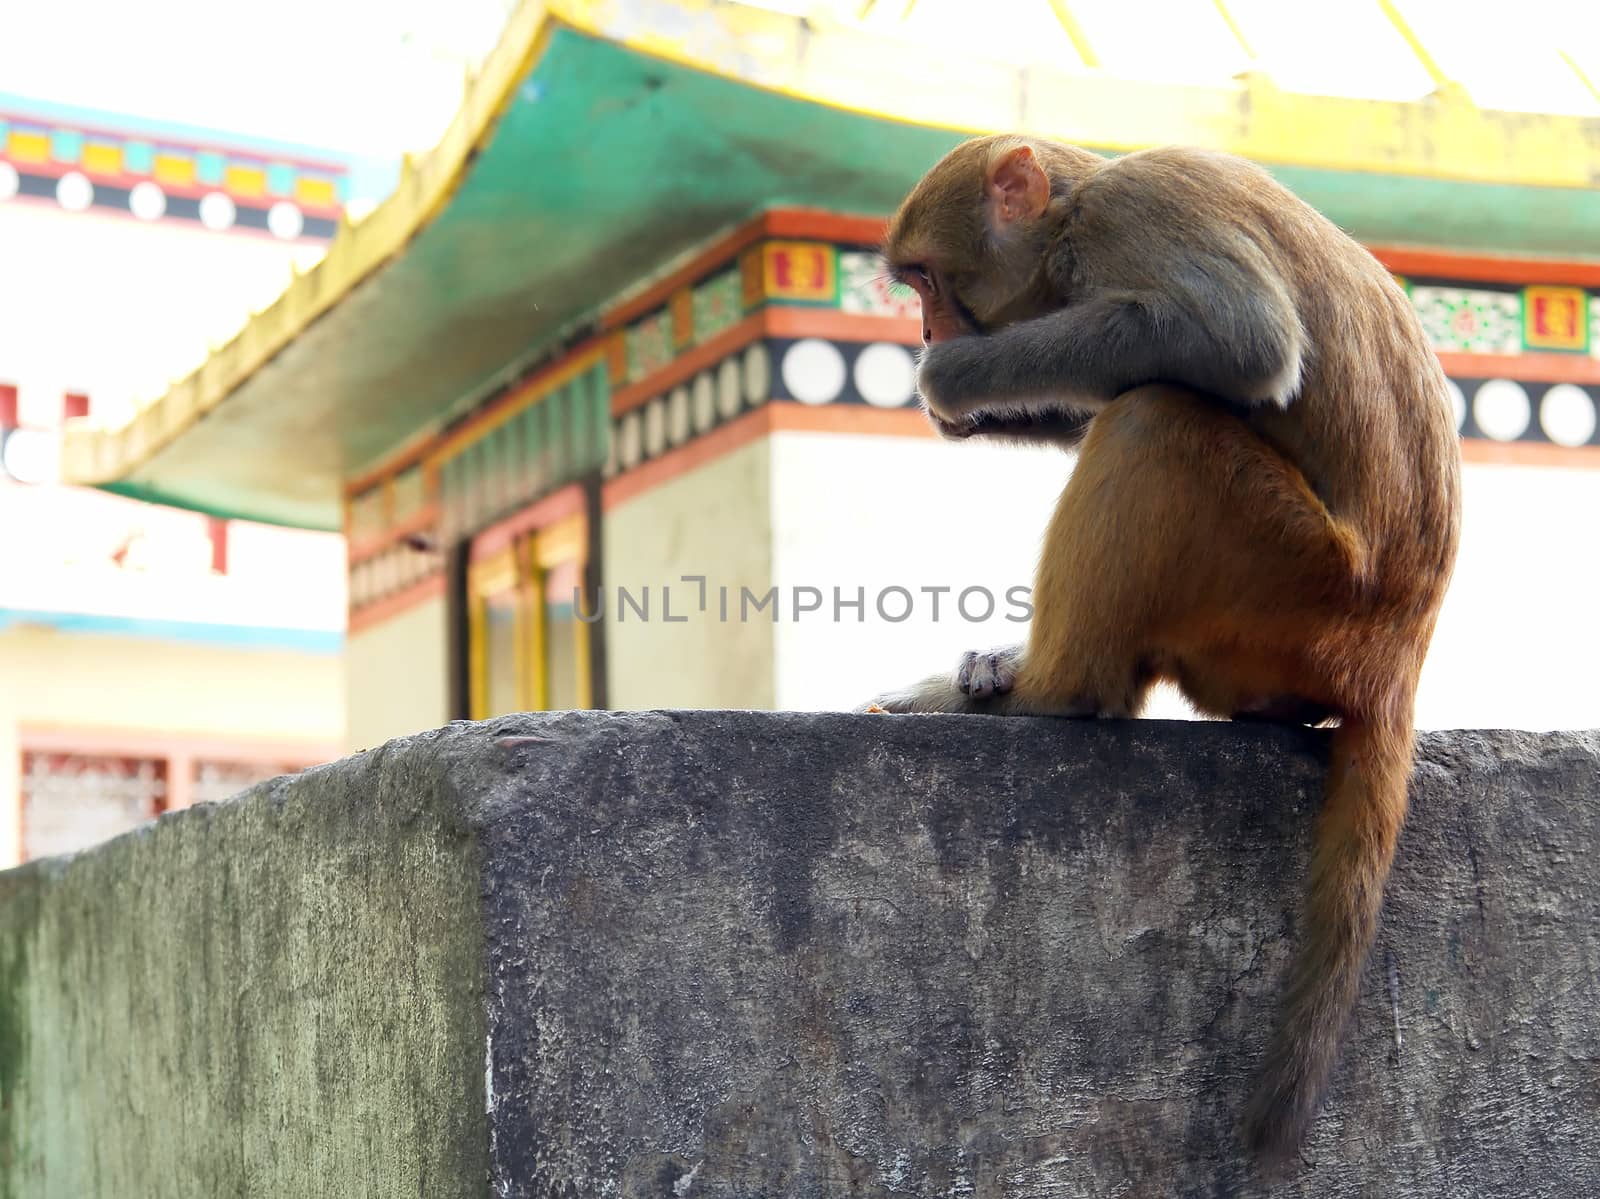 Wild monkey in Swayambhunath temple on the outskirts of Kathmand by ptxgarfield